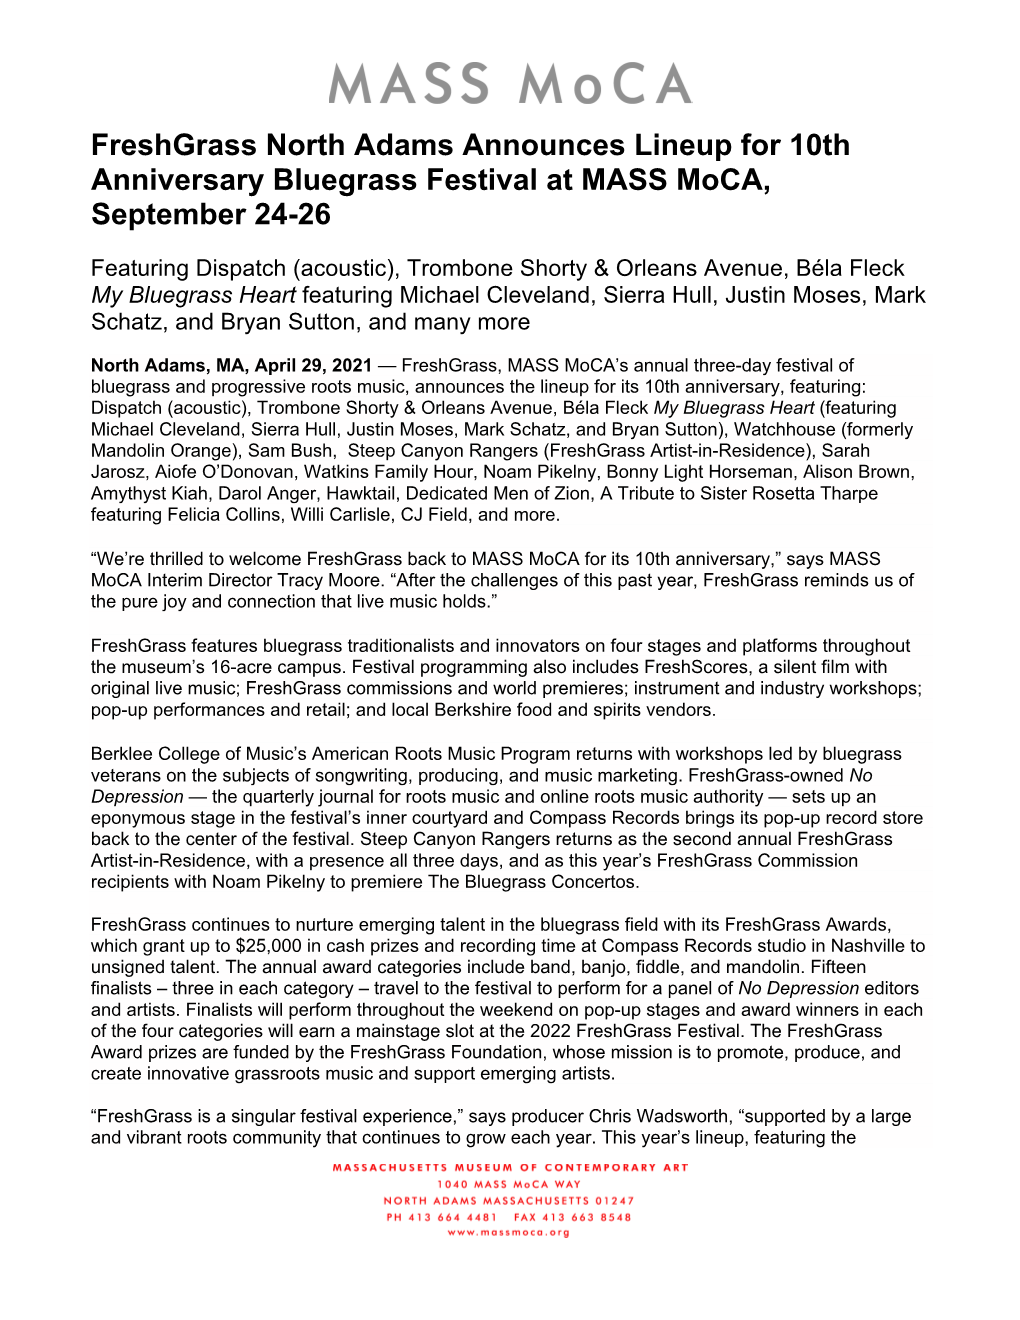 Freshgrass North Adams Announces Lineup for 10Th Anniversary Bluegrass Festival at MASS Moca, September 24-26